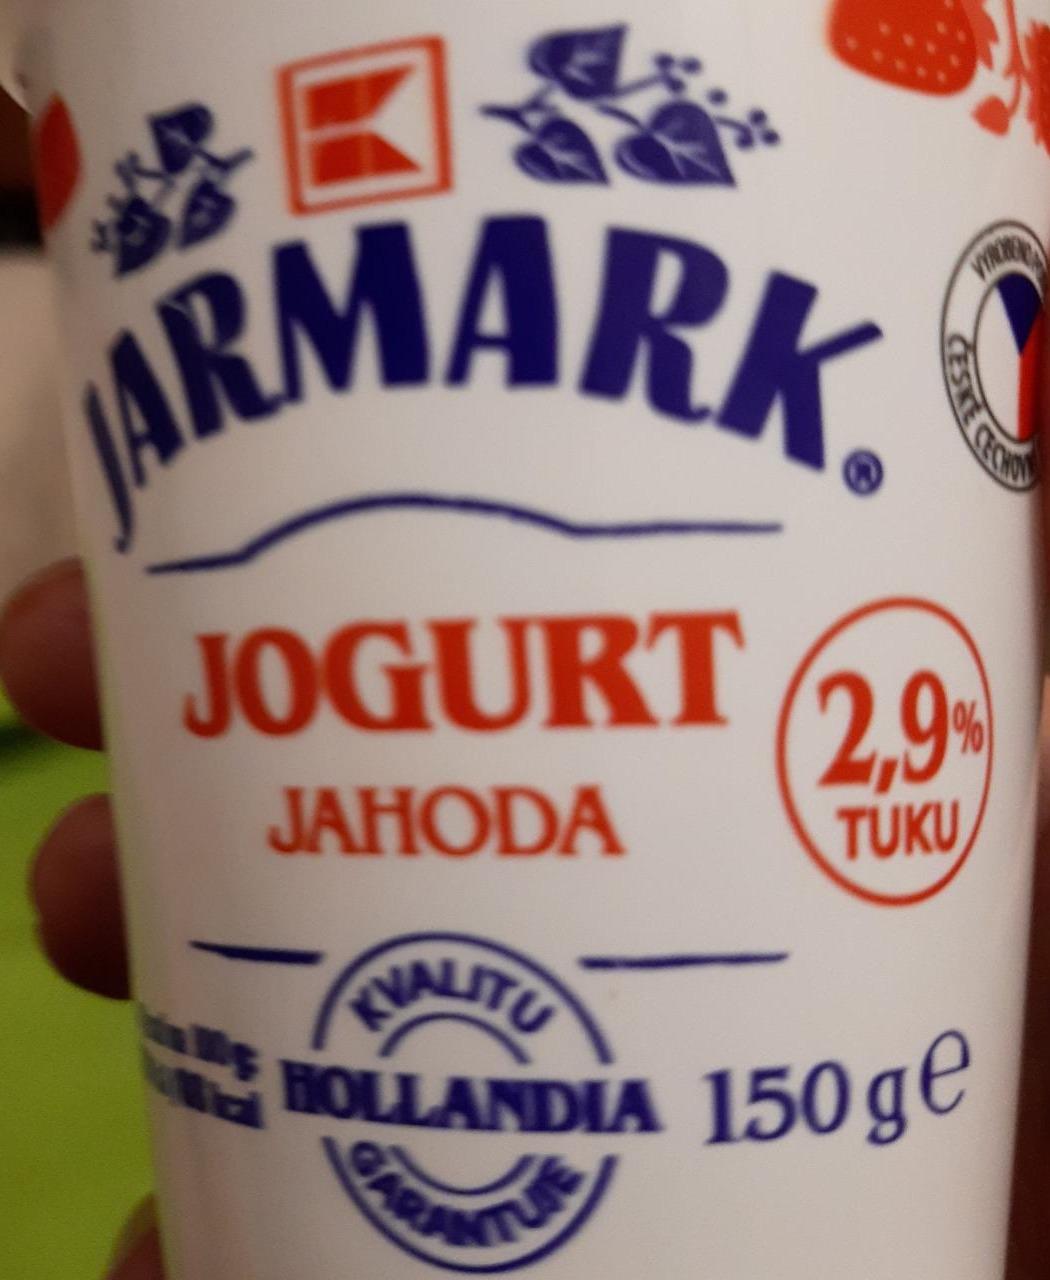 Фото - йогурт клубничный 2.9% K-jarmark